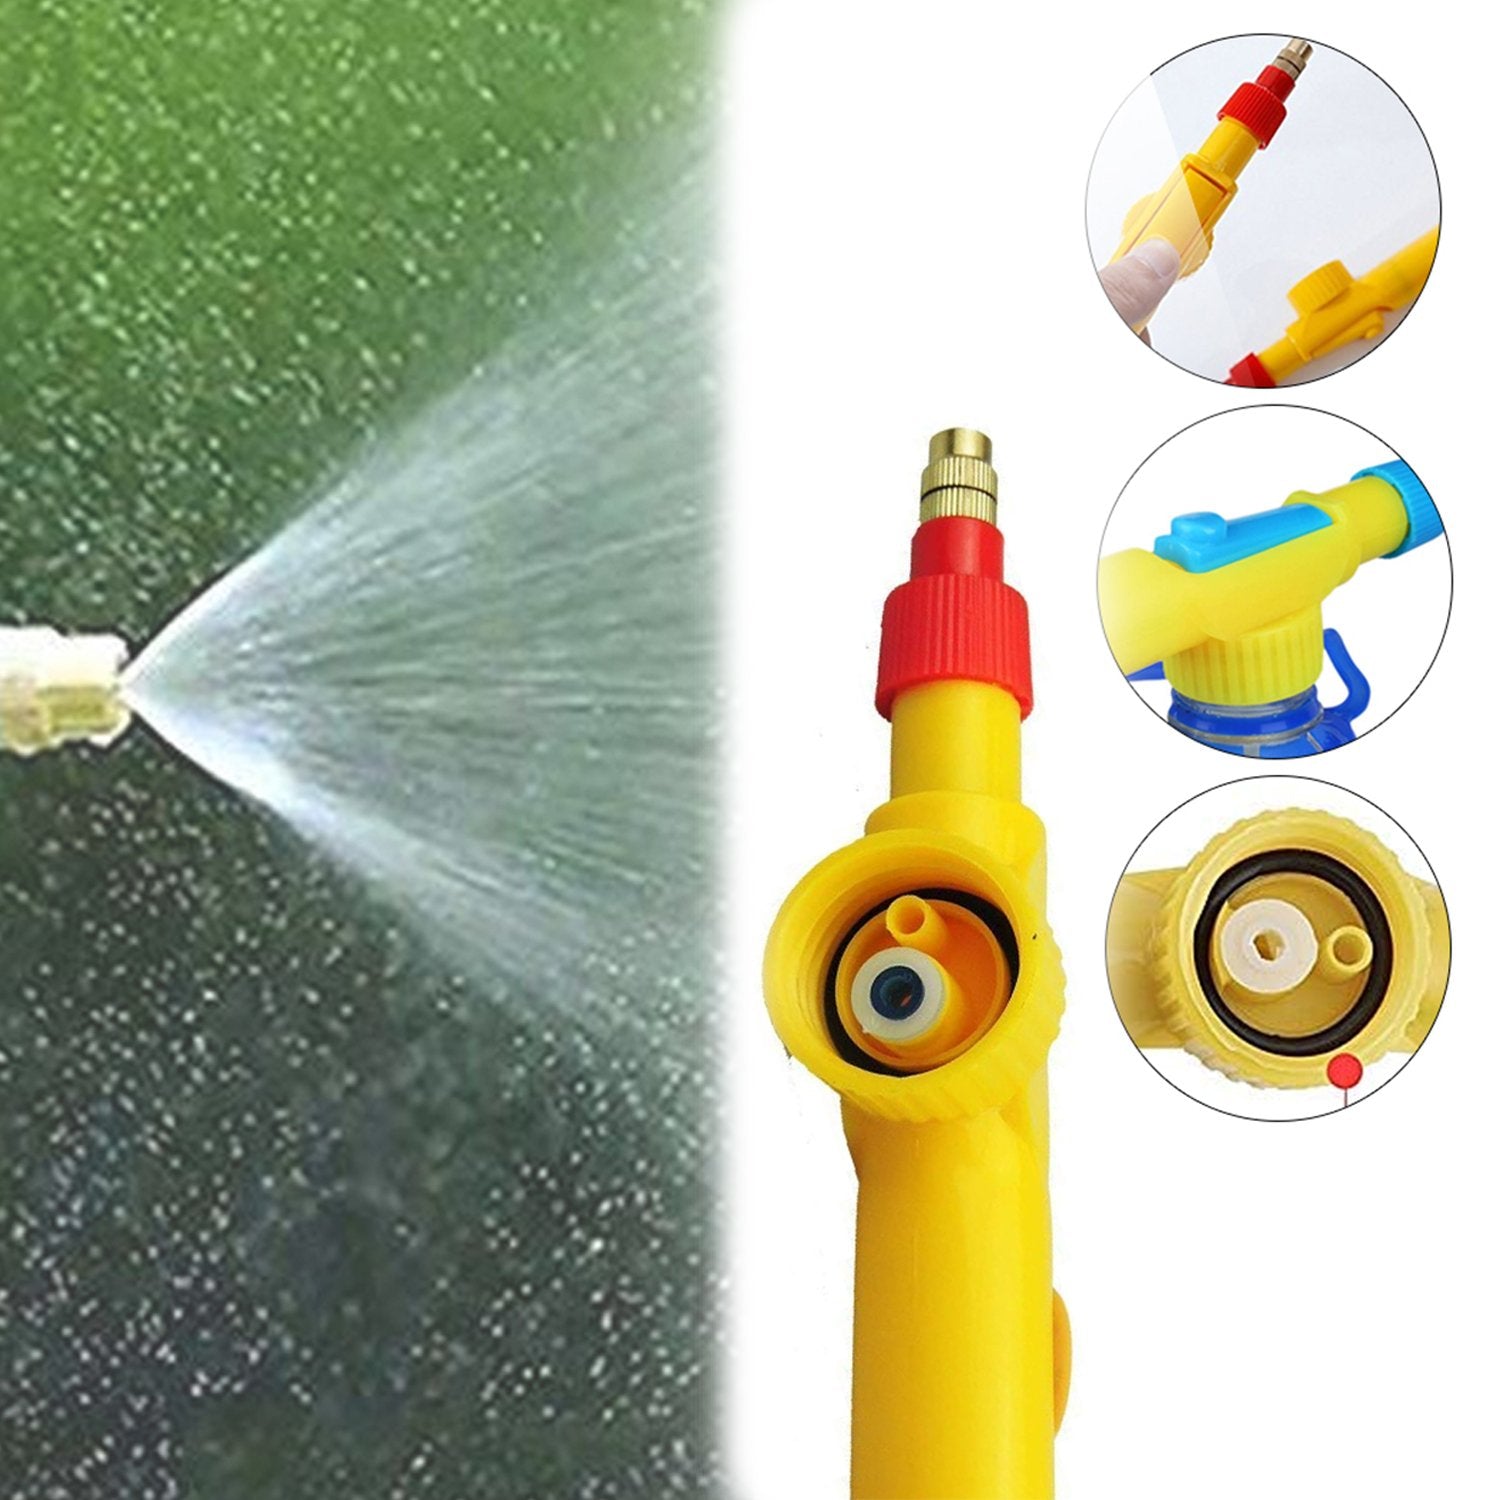 ambitionofcreativity in gardening tools bottle sprayer for plants garden pesticide car wash with adjustable brass nozzle sprayer handheld pump